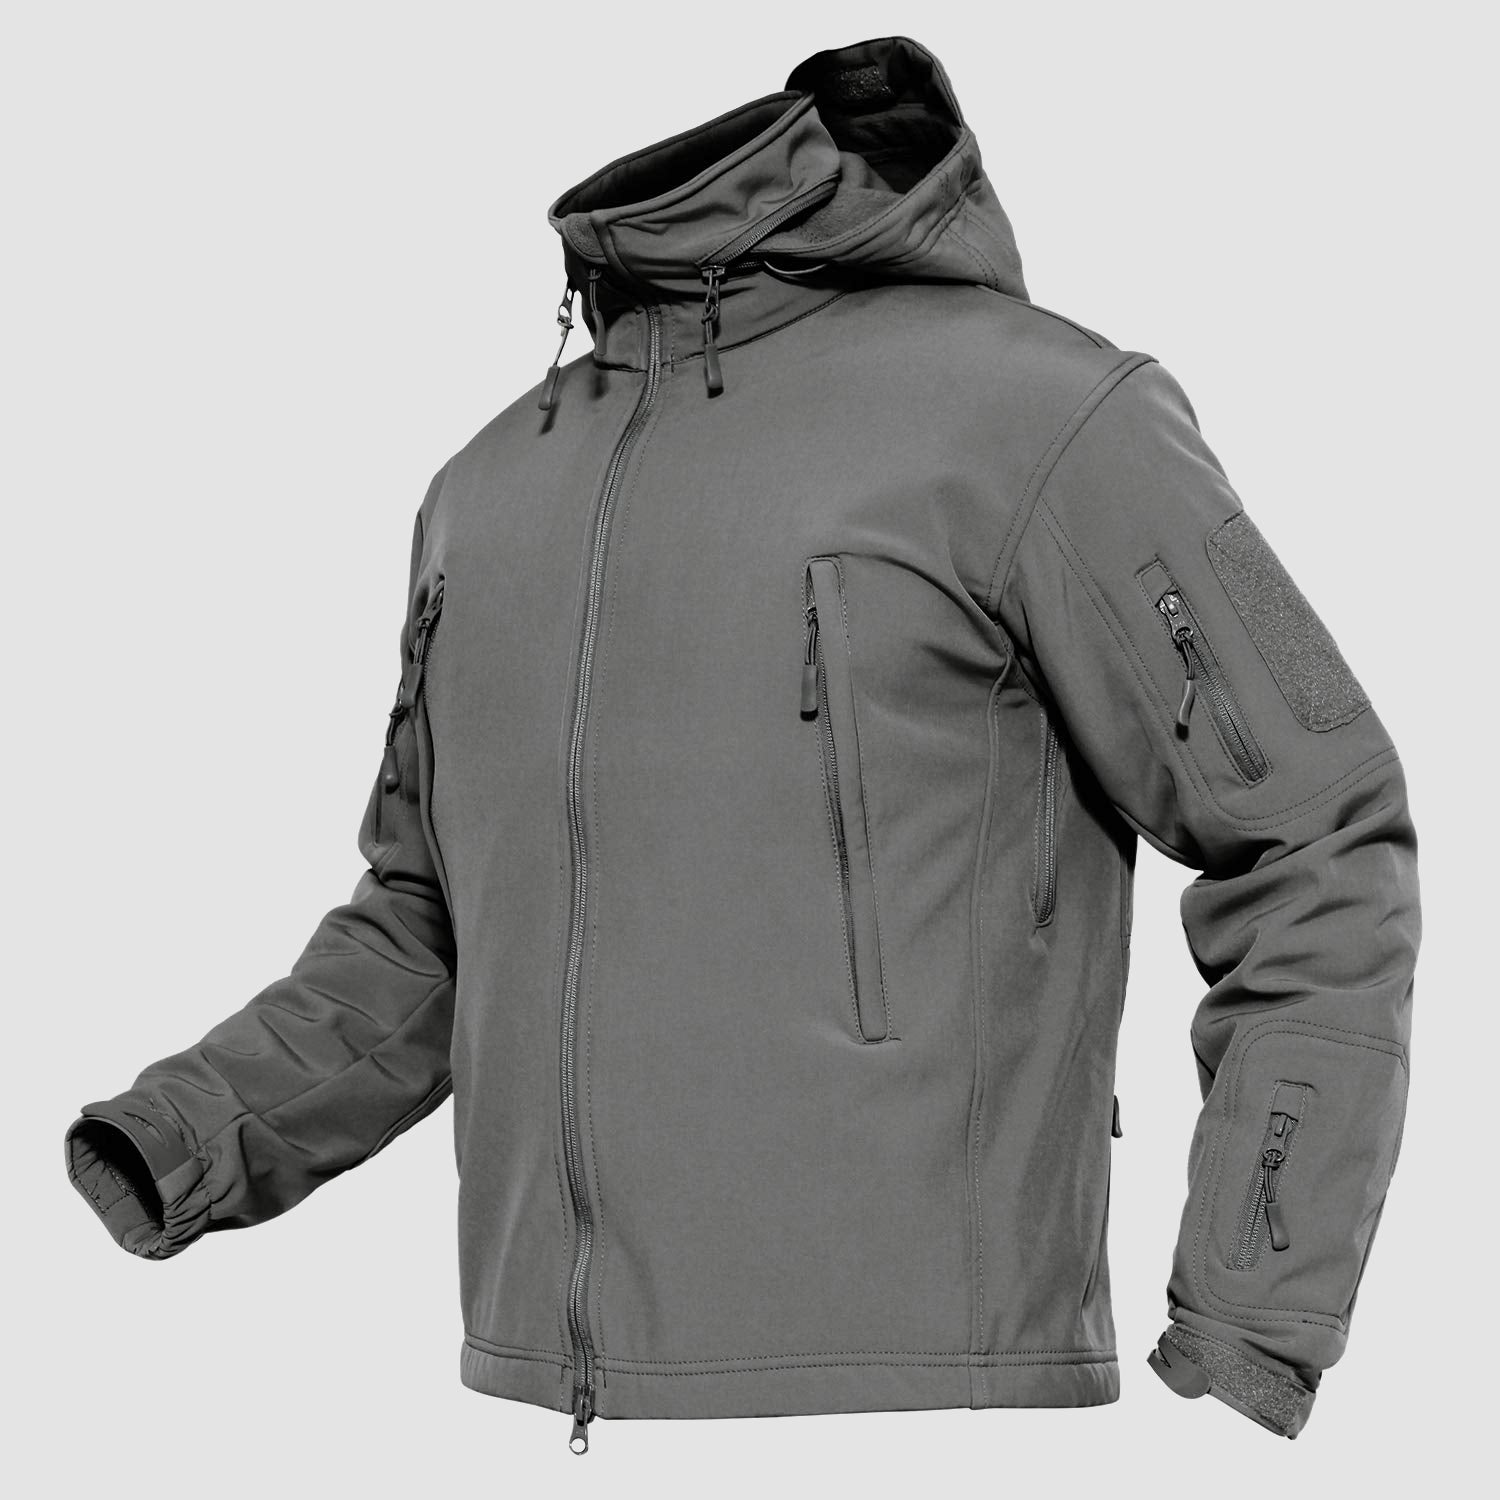 Men's Tactical Jacket Winter Snow Ski Jacket Water Resistant Softshell Fleece Lined Winter Coats Multi-Pockets, Dark Grey / L